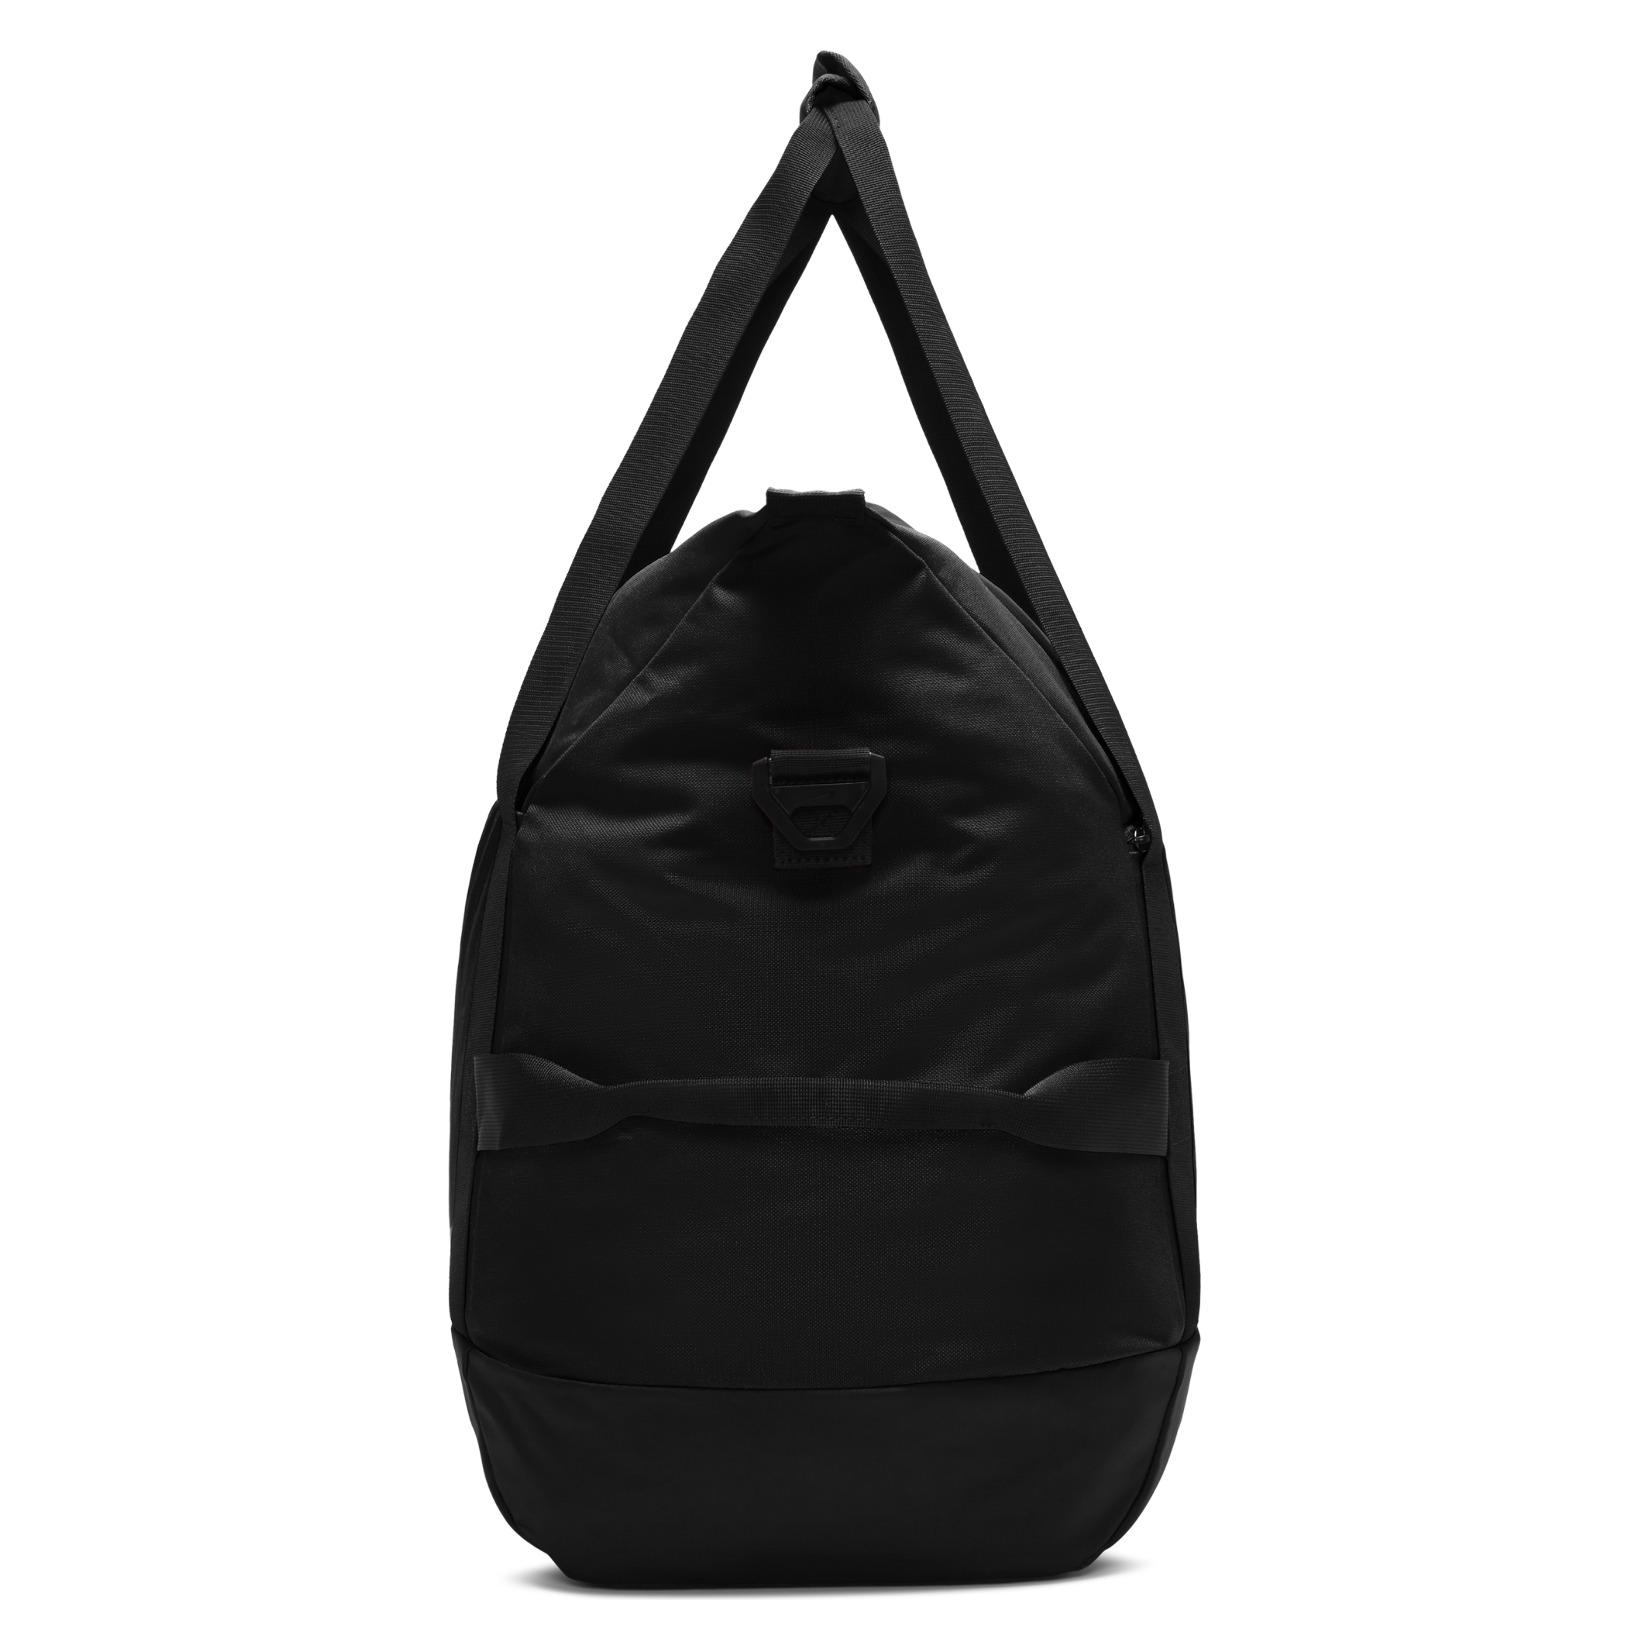 Nike Academy Team Duffel Bag (Large)